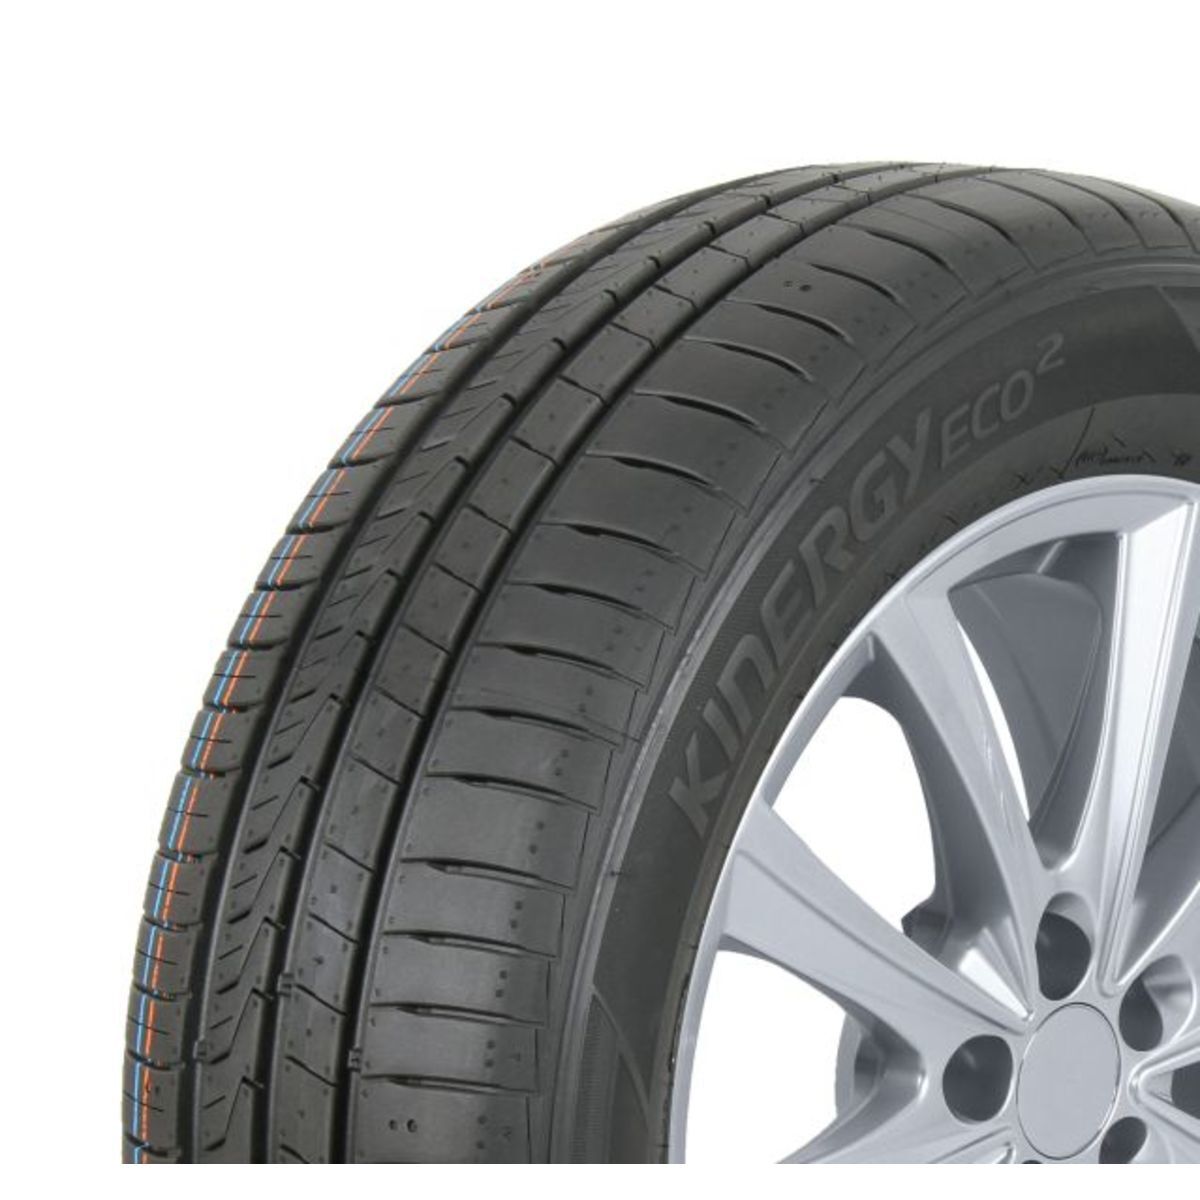 Neumáticos de verano HANKOOK Kinergy eco2 K435 215/60R17 XL 100H